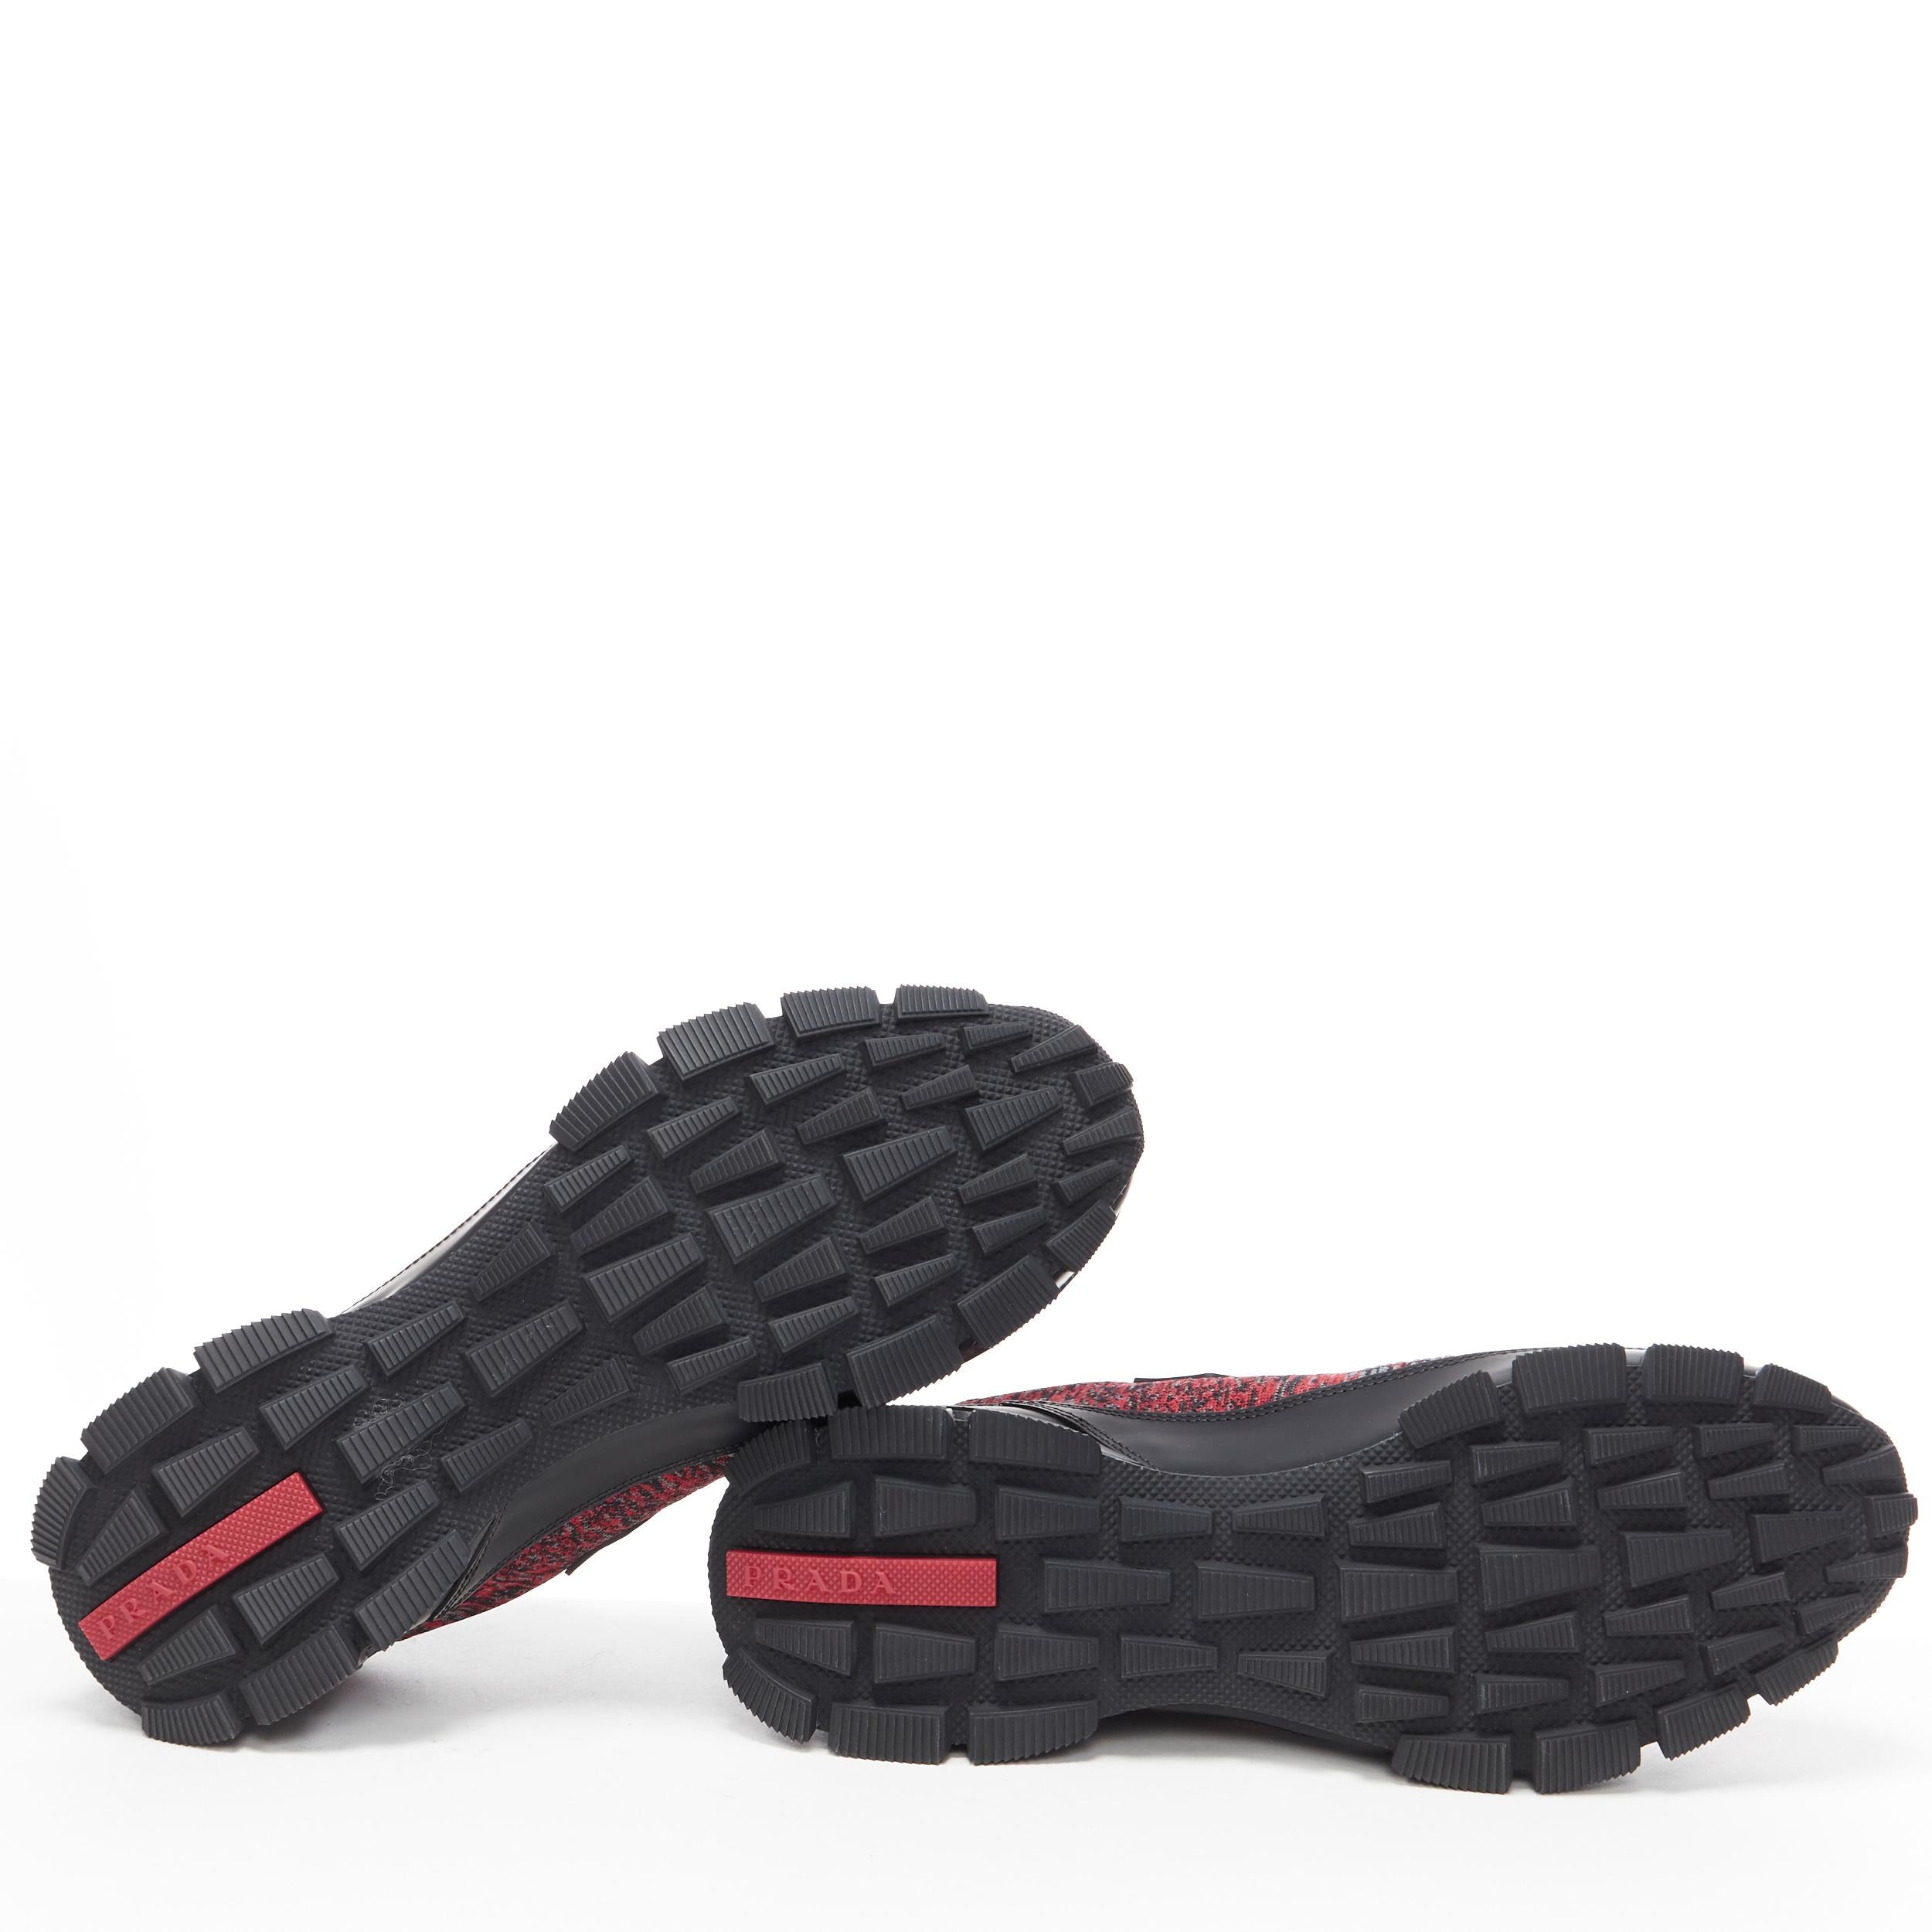 Black new PRADA Crossection Knit Low red black sock low runner sneakers UK7 EU40